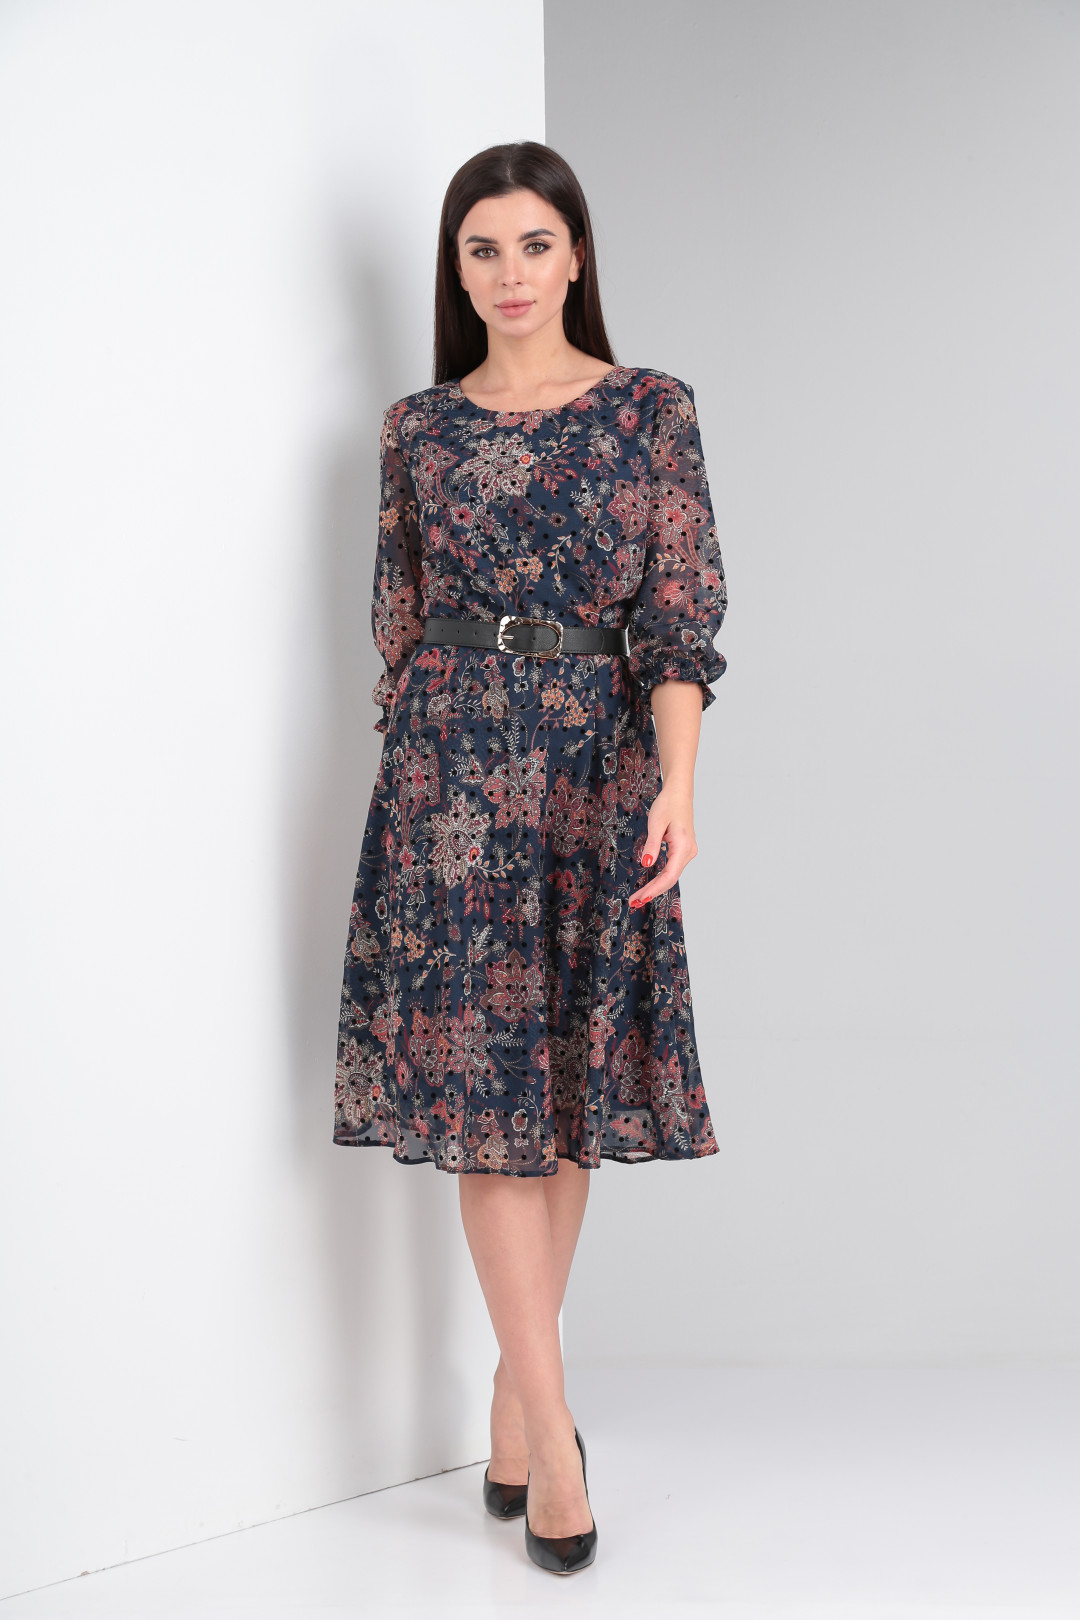 Платье Мода-Версаль 2363 т.синий